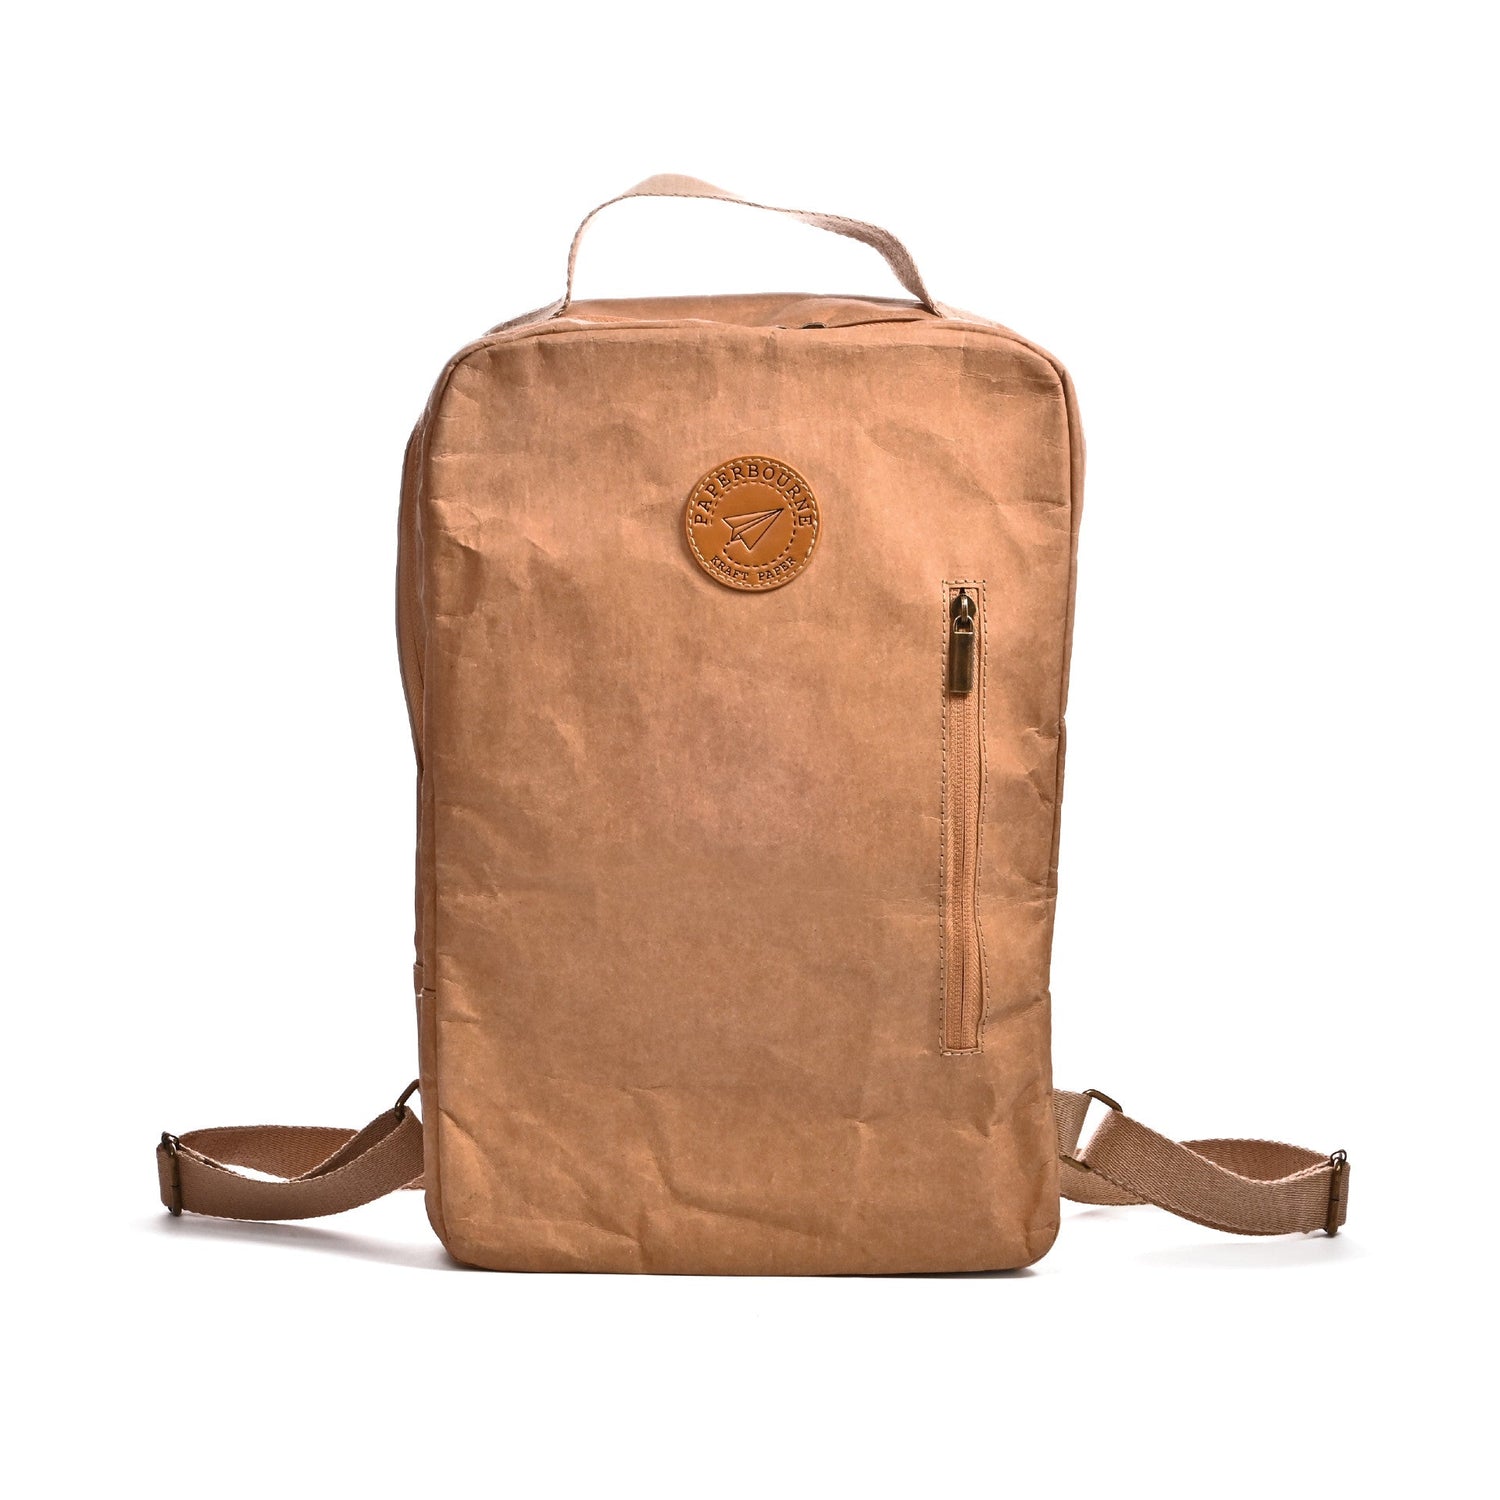 Pax - kraft paper backpack - EcoArtisans